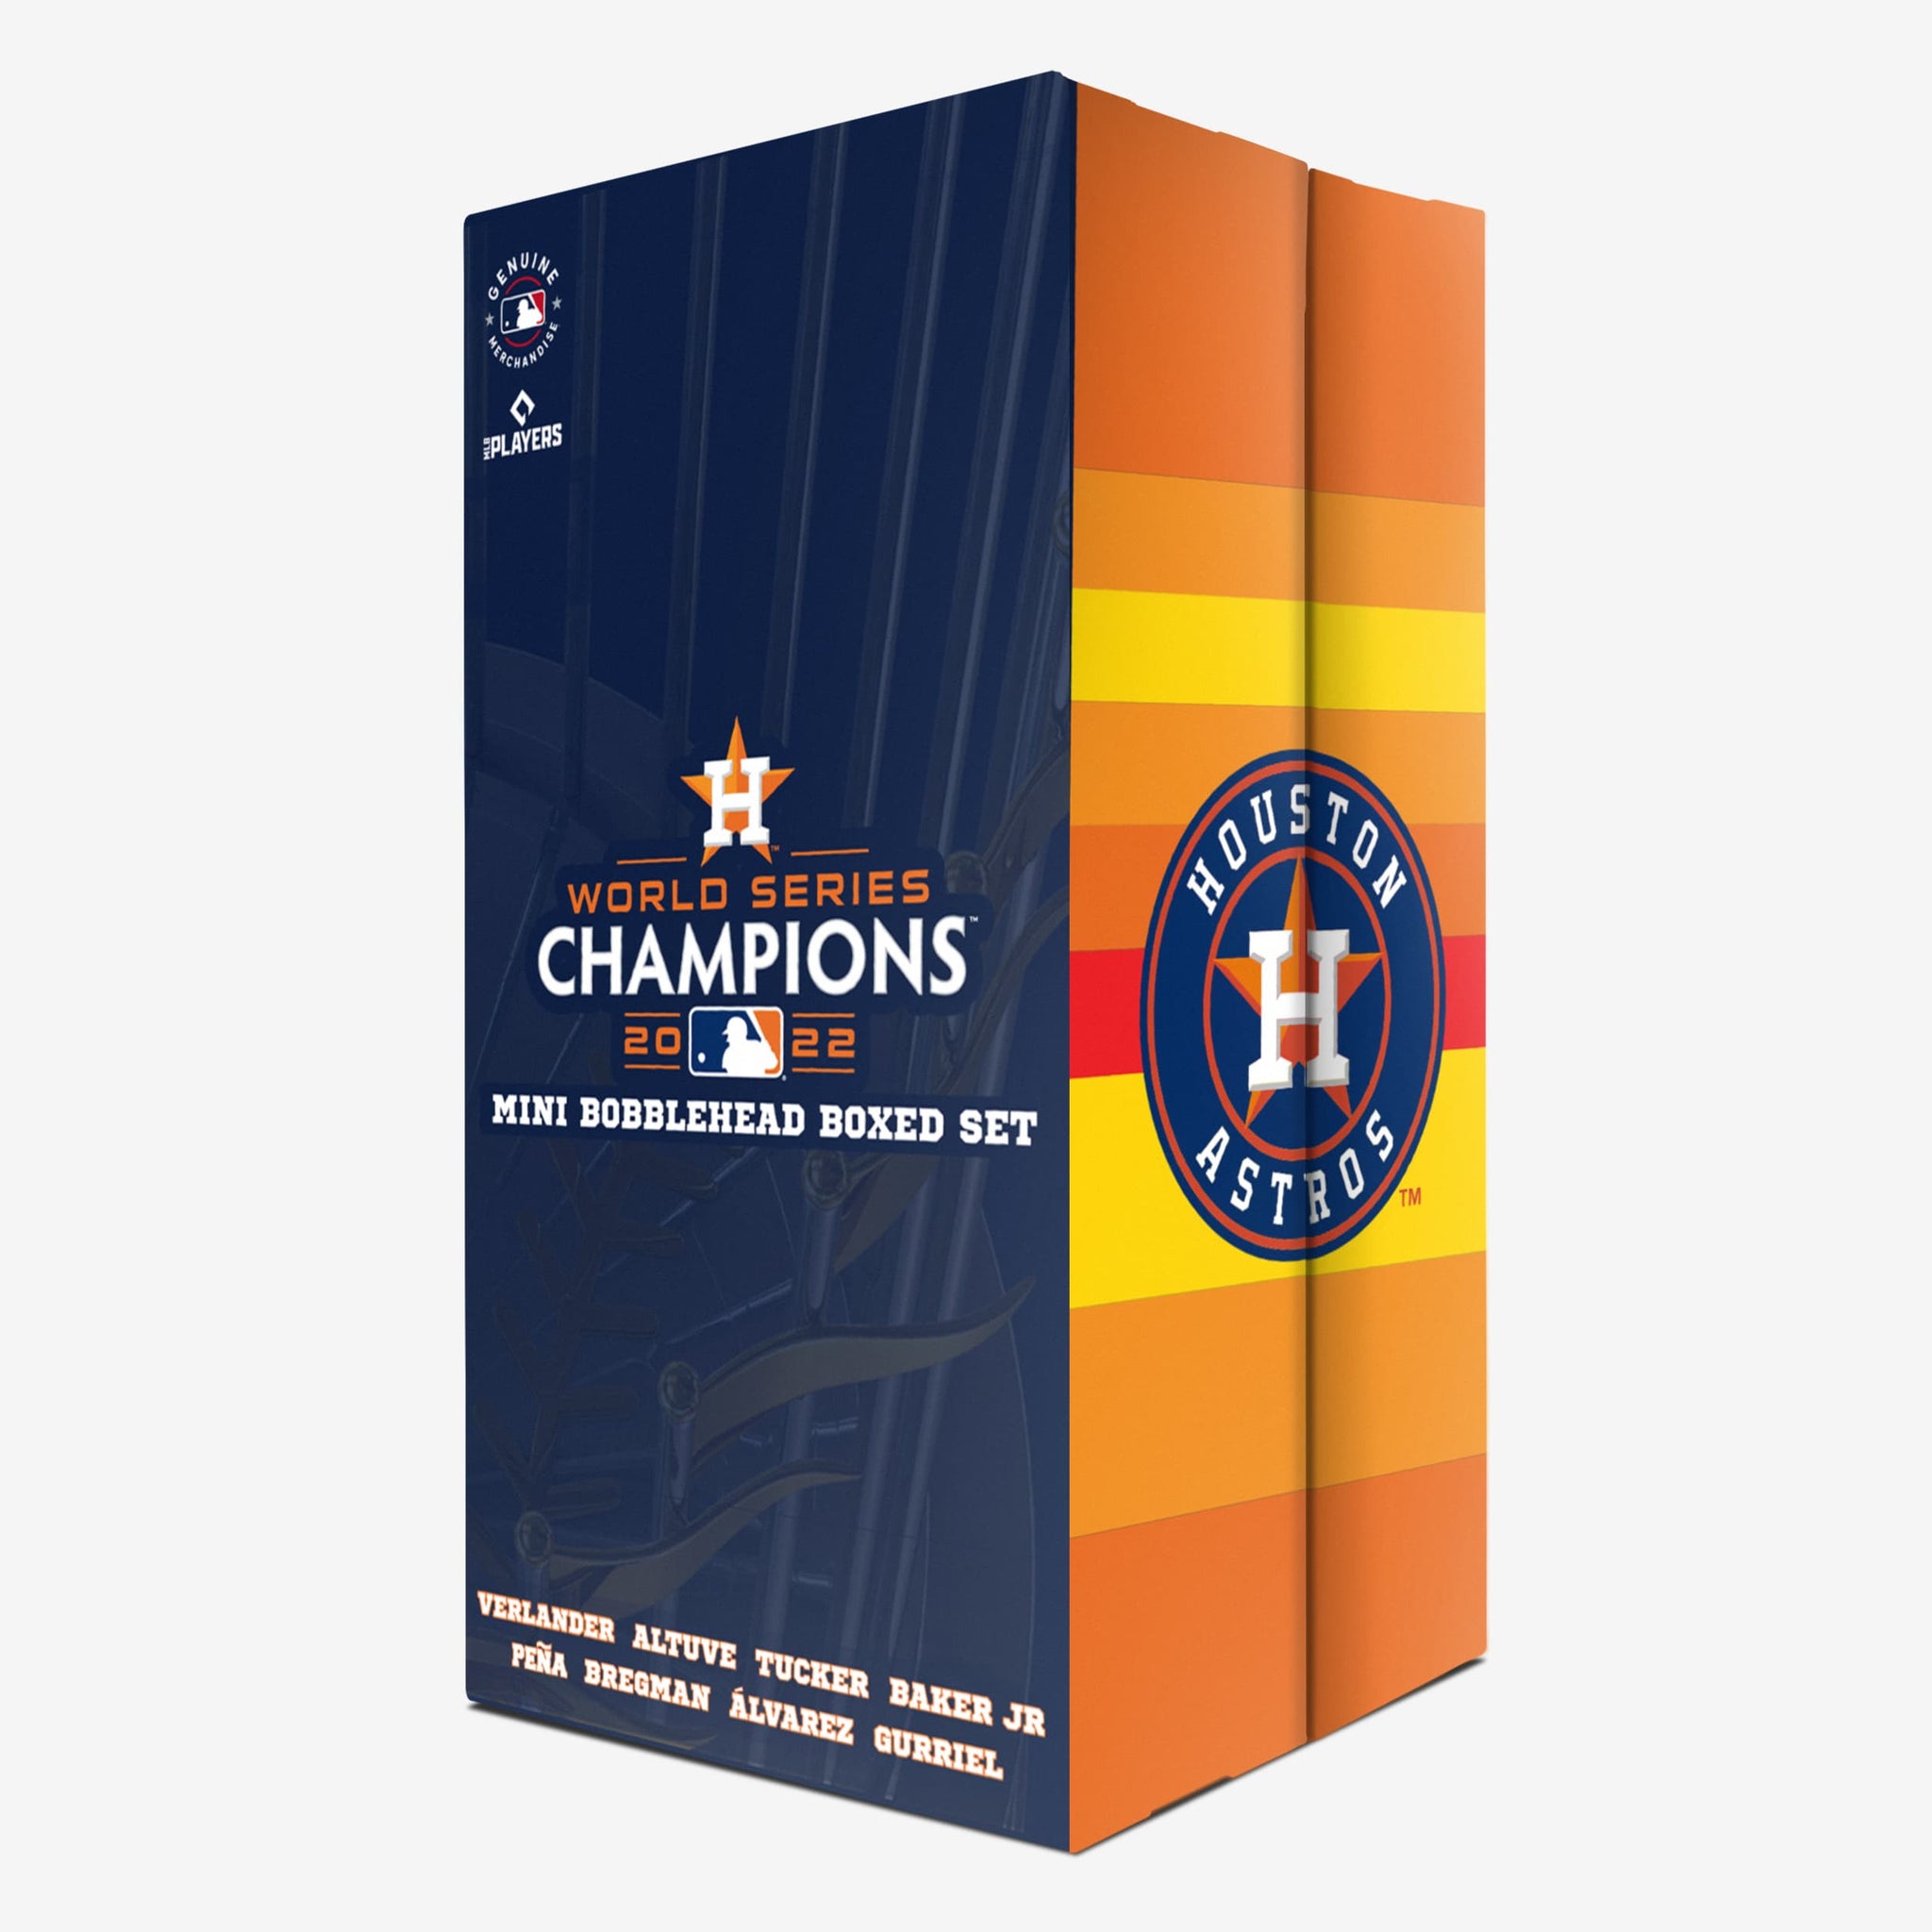 Jose Altuve Houston Astros 2022 World Series Champions Orange Jersey Bighead Bobblehead Officially Licensed by MLB